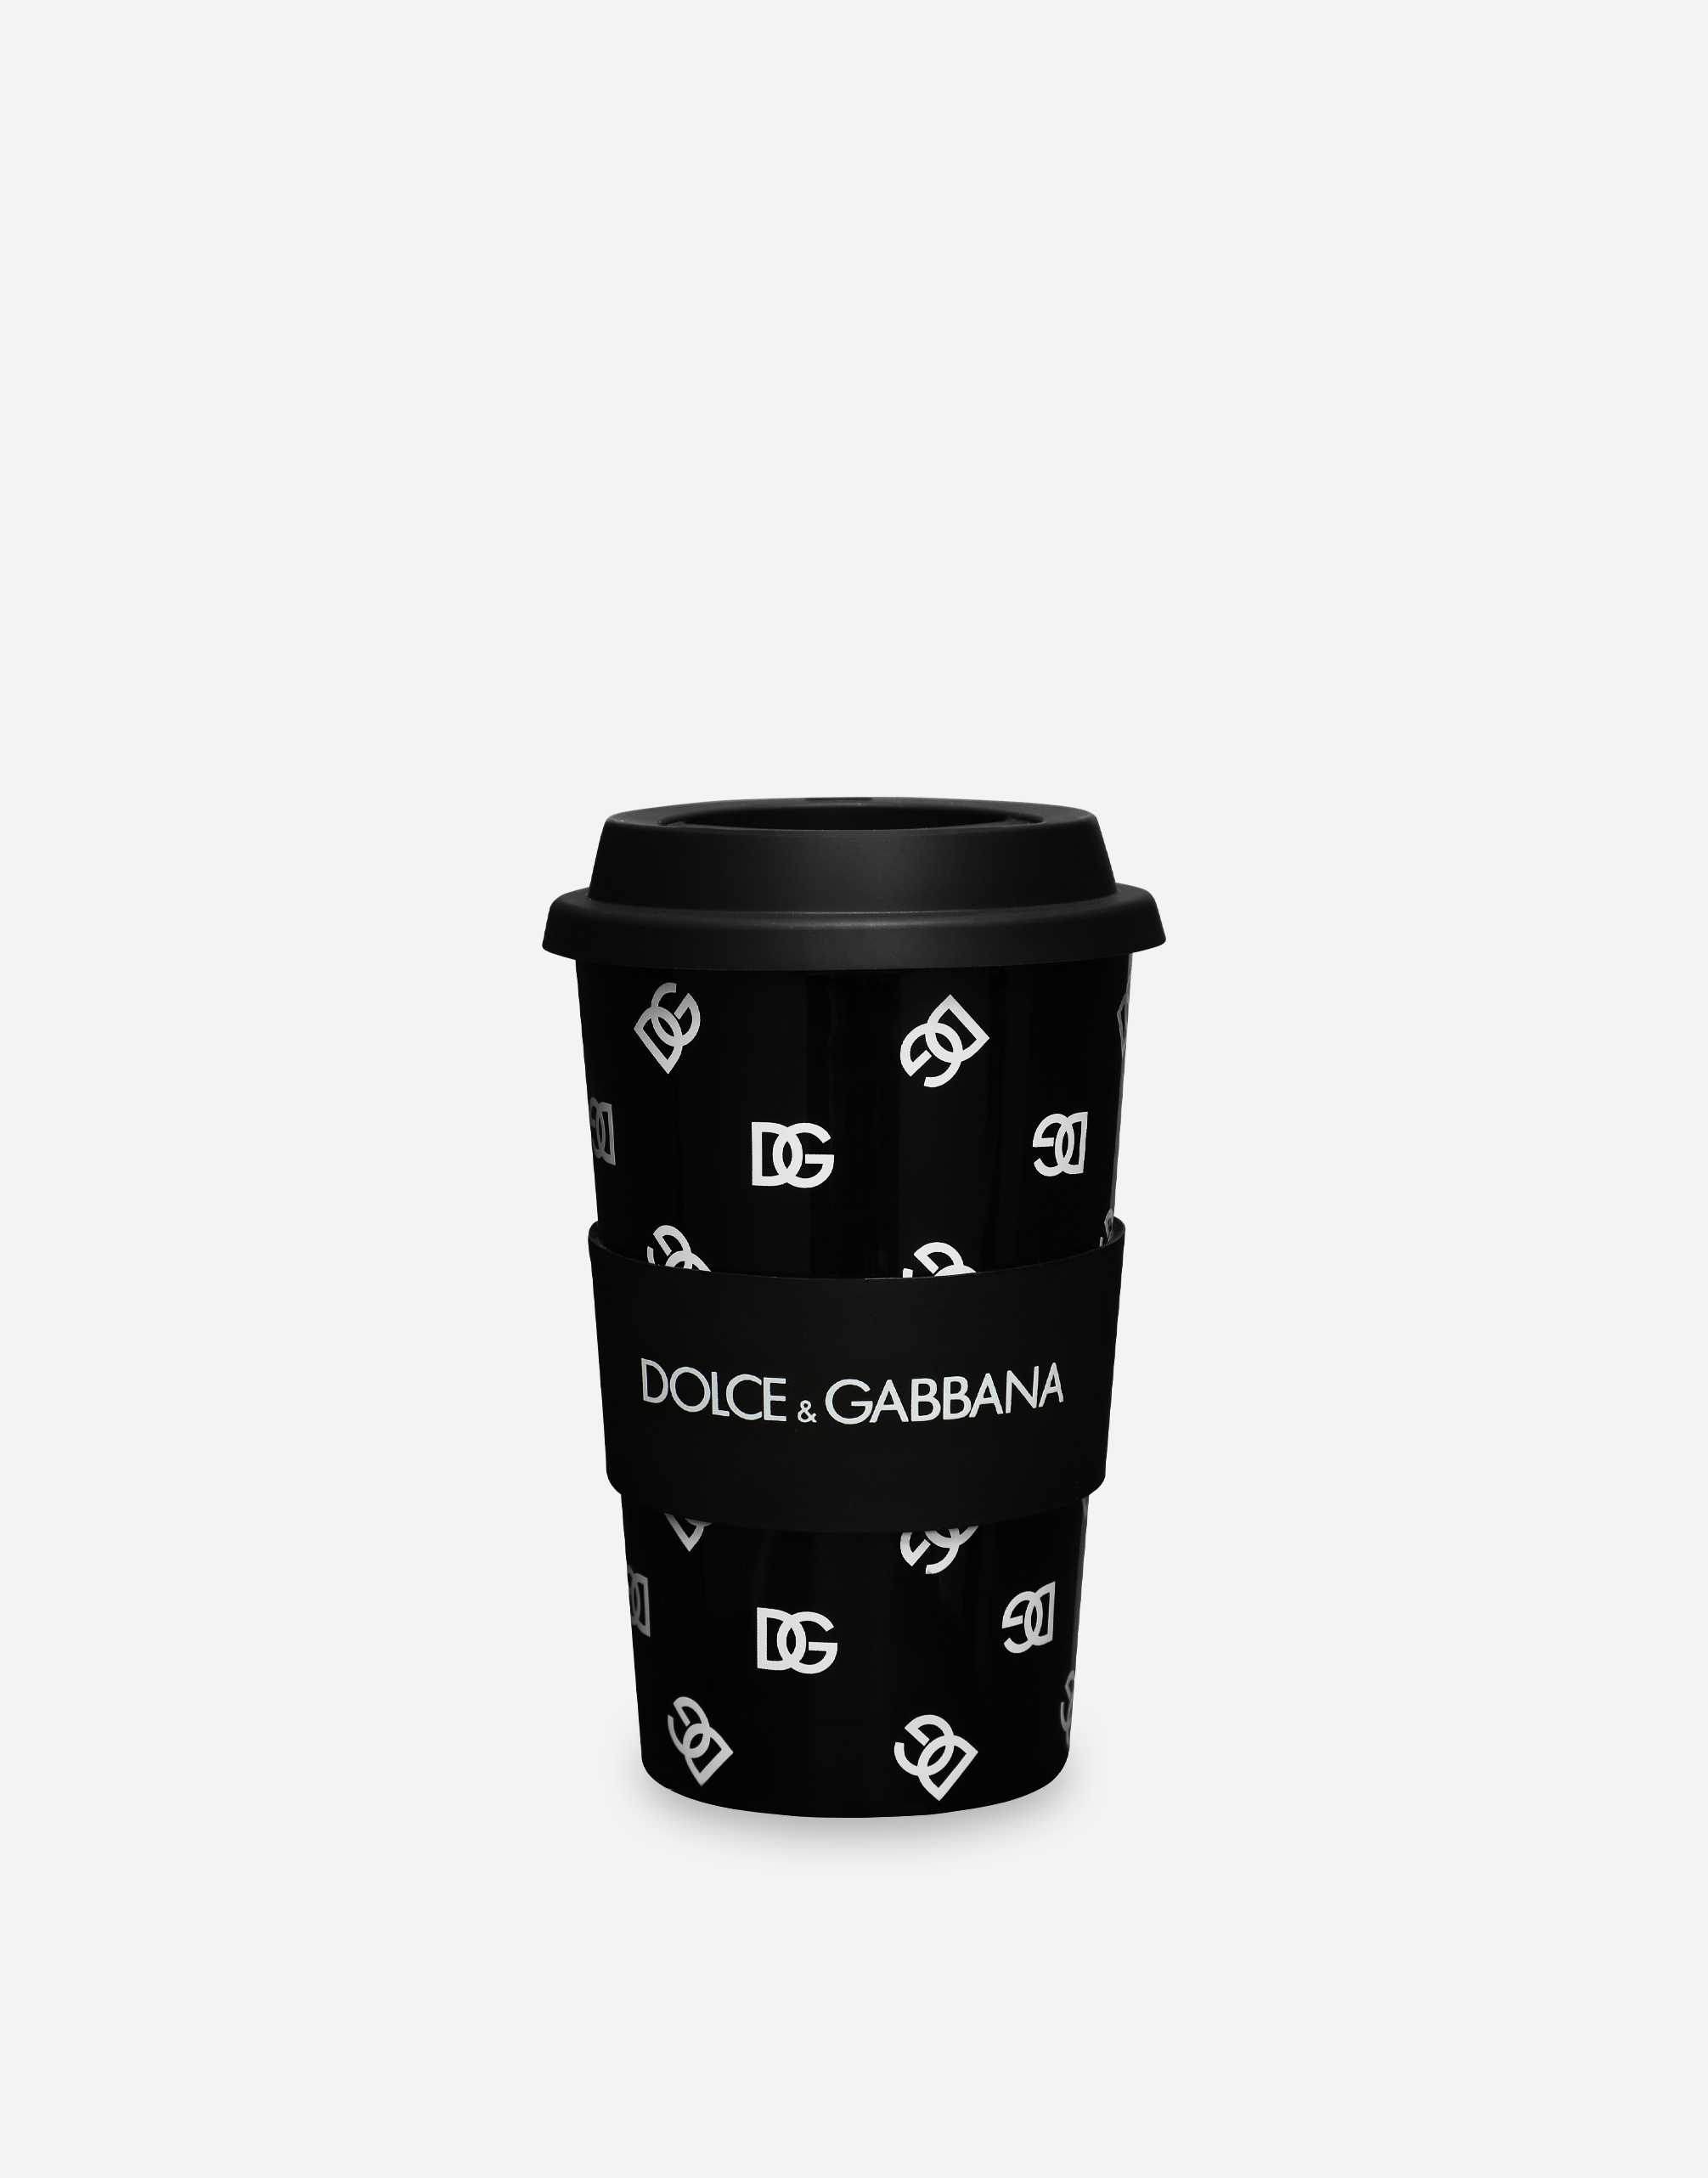 chanel coffee mug